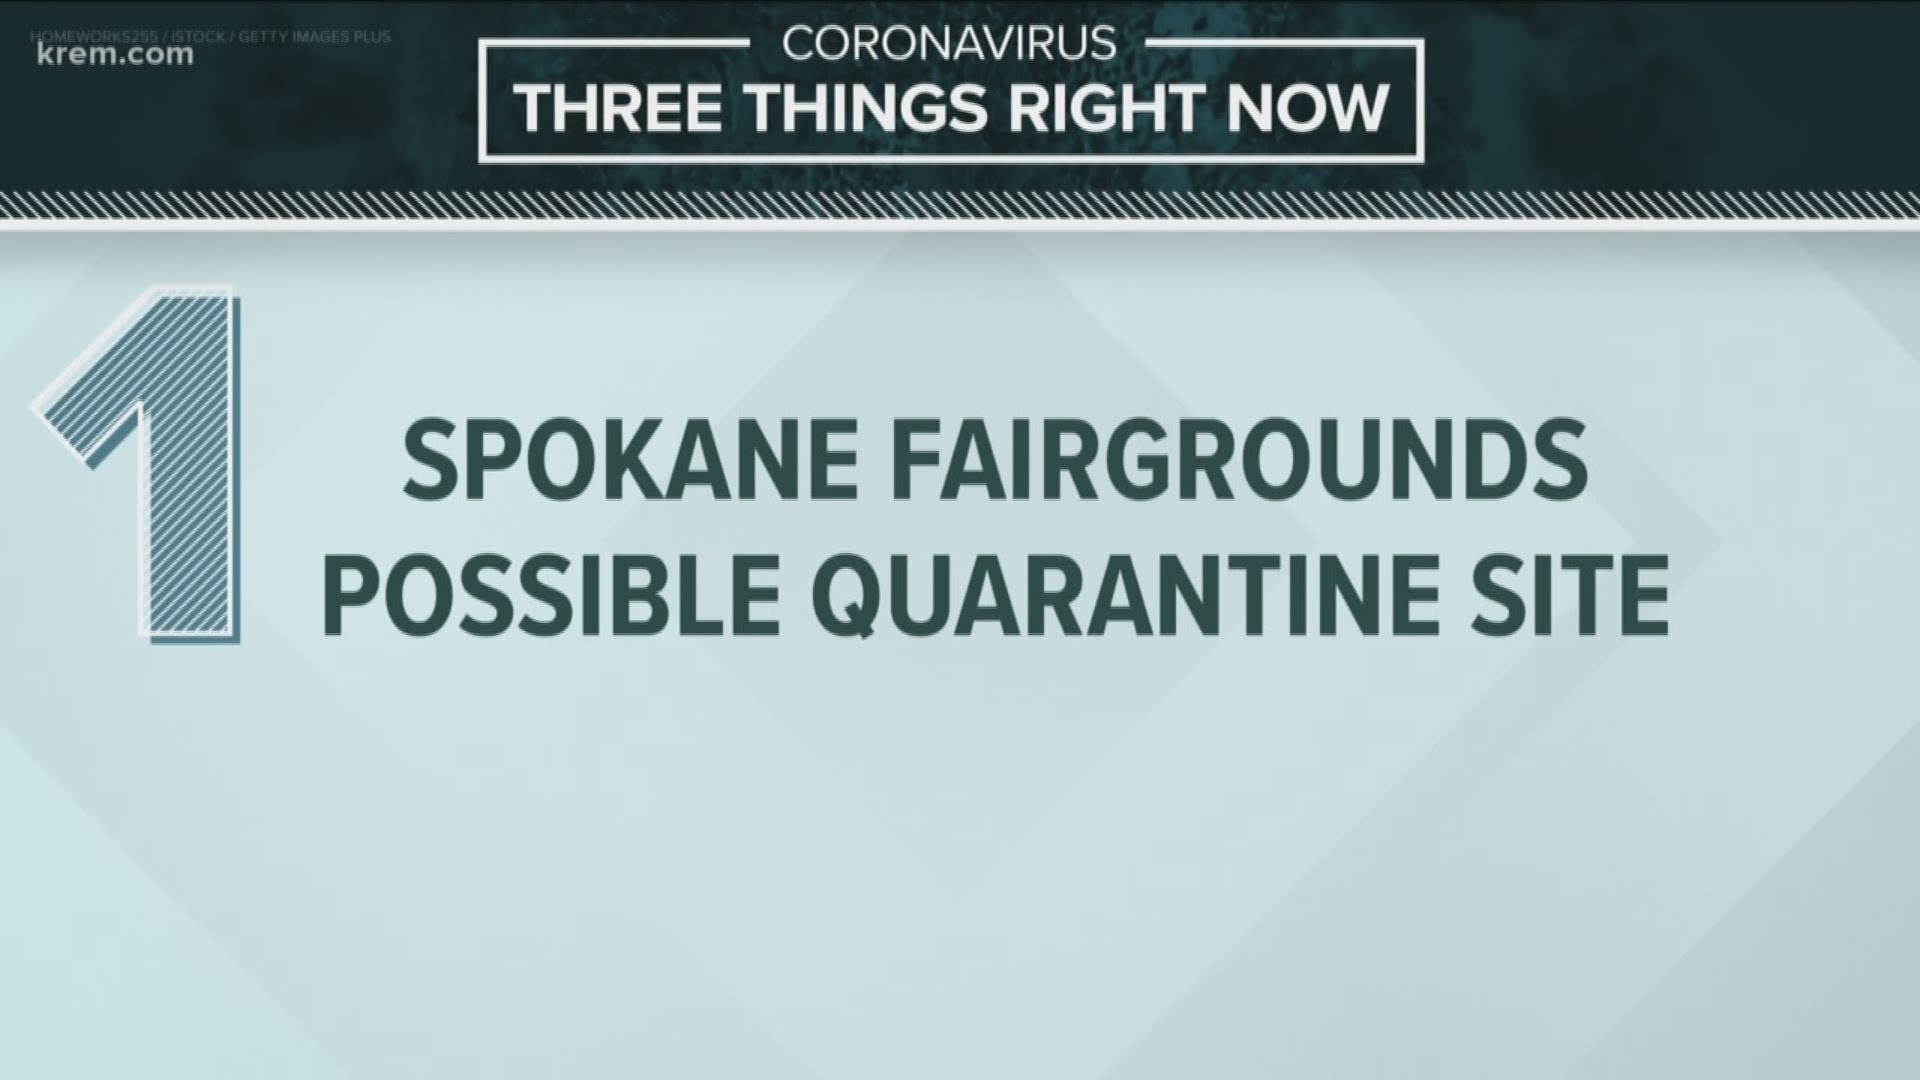 Spokane City spokesperson Brian Coddington said the fairgrounds are being prepared as a potential isolation site.